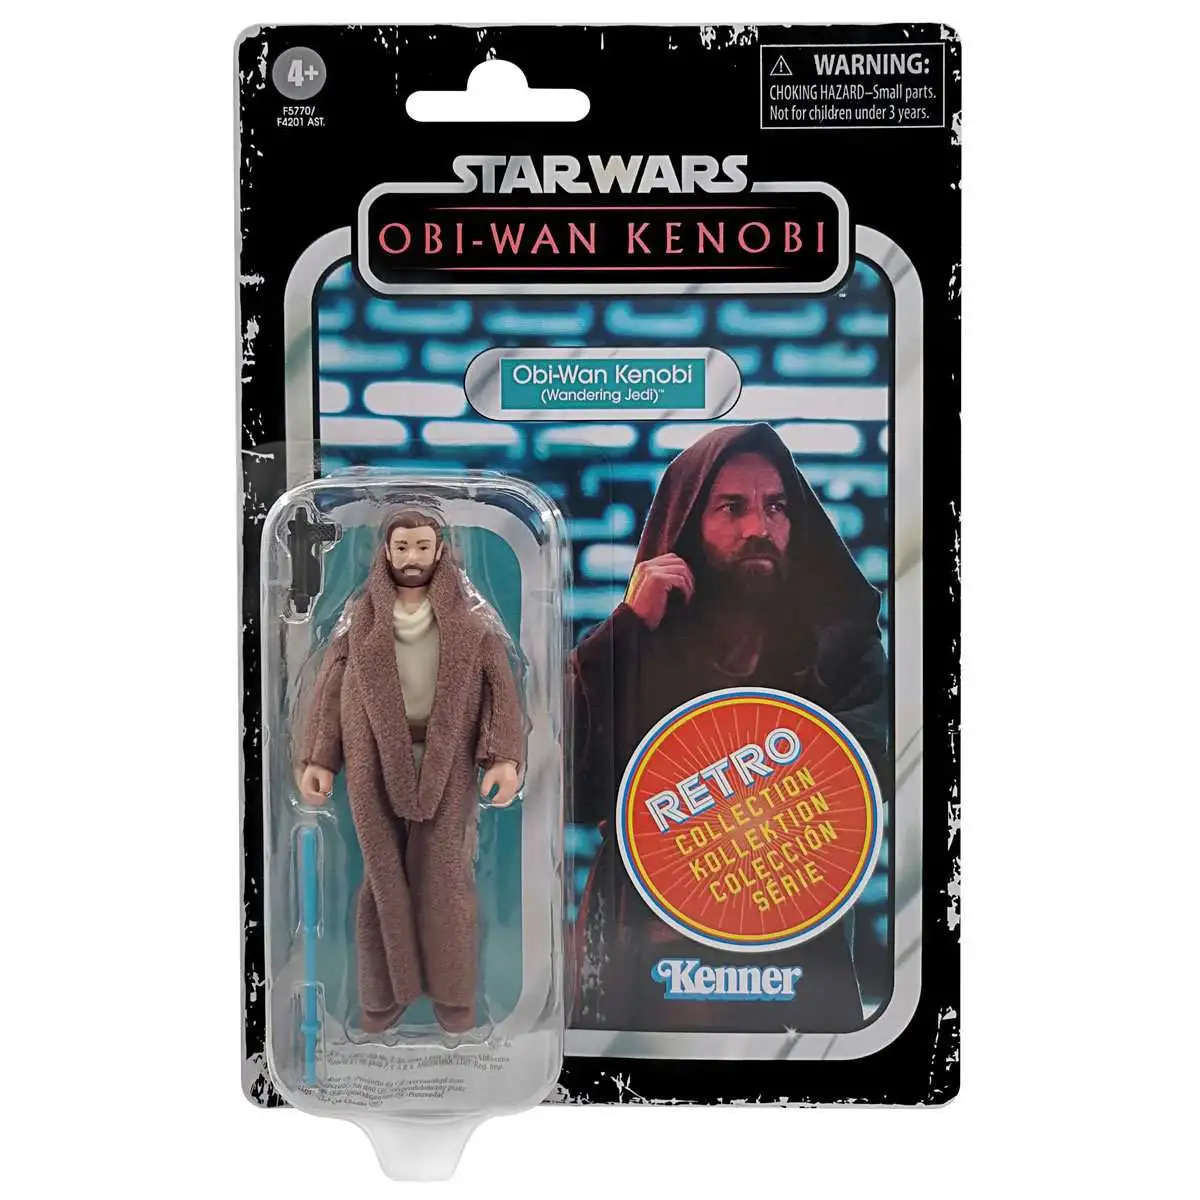 Star Wars Retro Collection Obi-Wan Kenobi Action Figure [Wandering Jedi, Disney Series] (Pre-Order ships September)